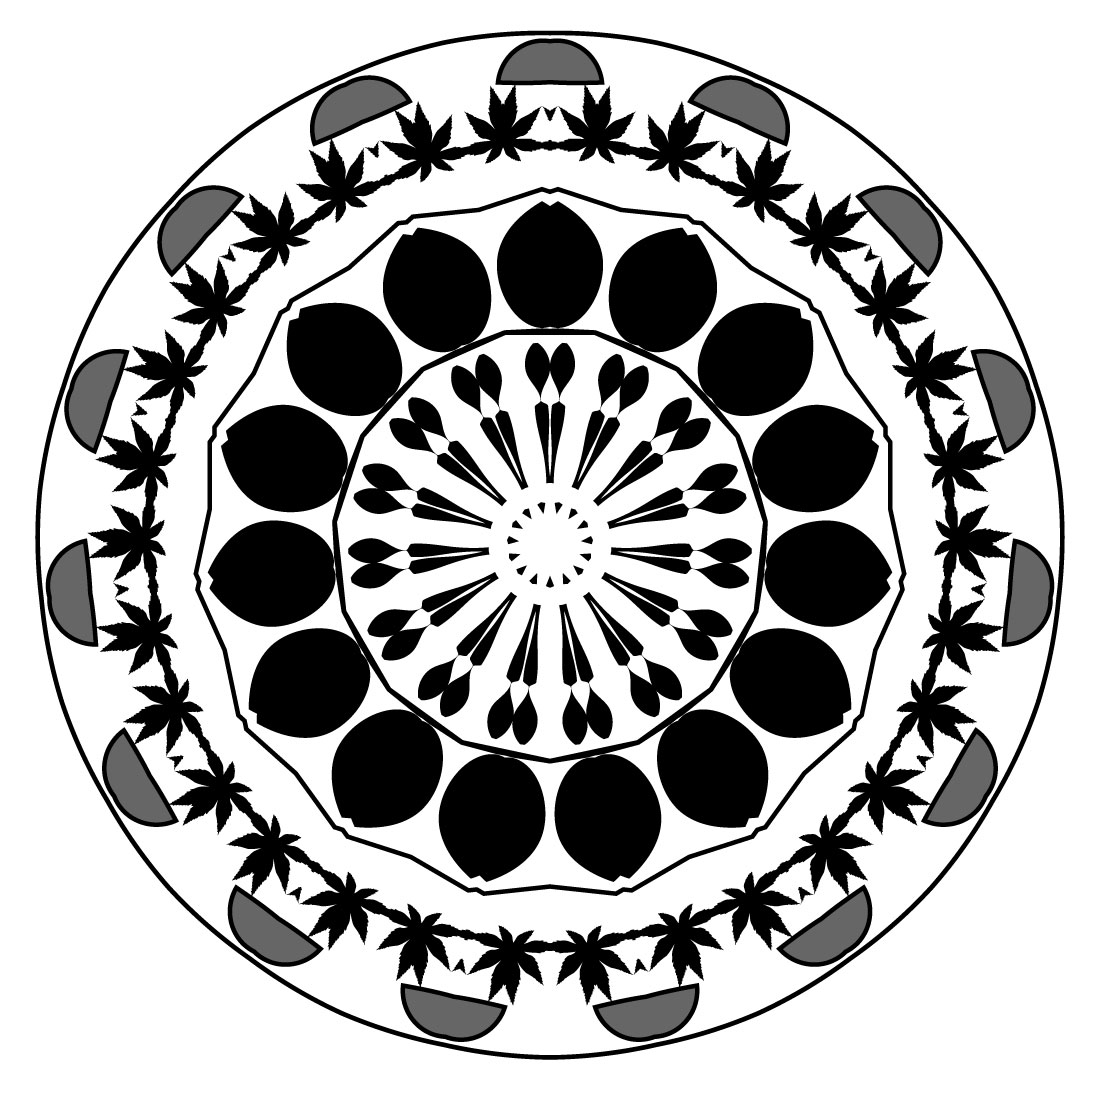 Mandala Art leaf in black and white cover image.